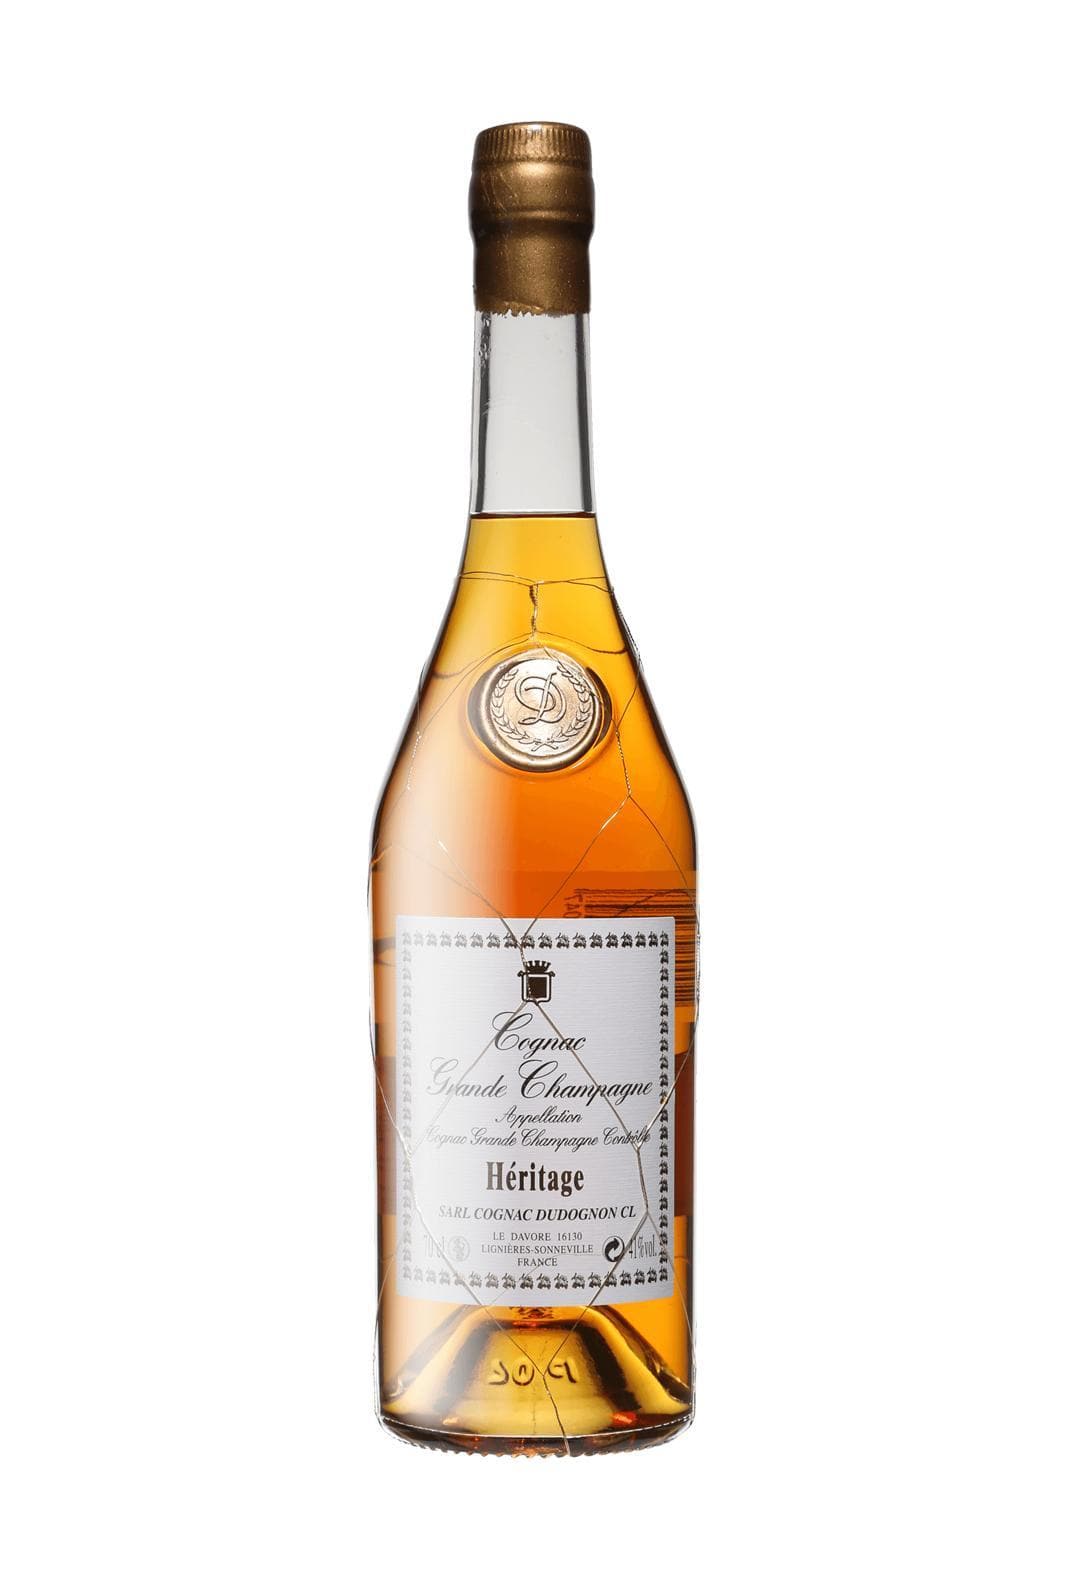 Dudognon Cognac Heritage 40 years 41% 700ml | Brandy | Shop online at Spirits of France